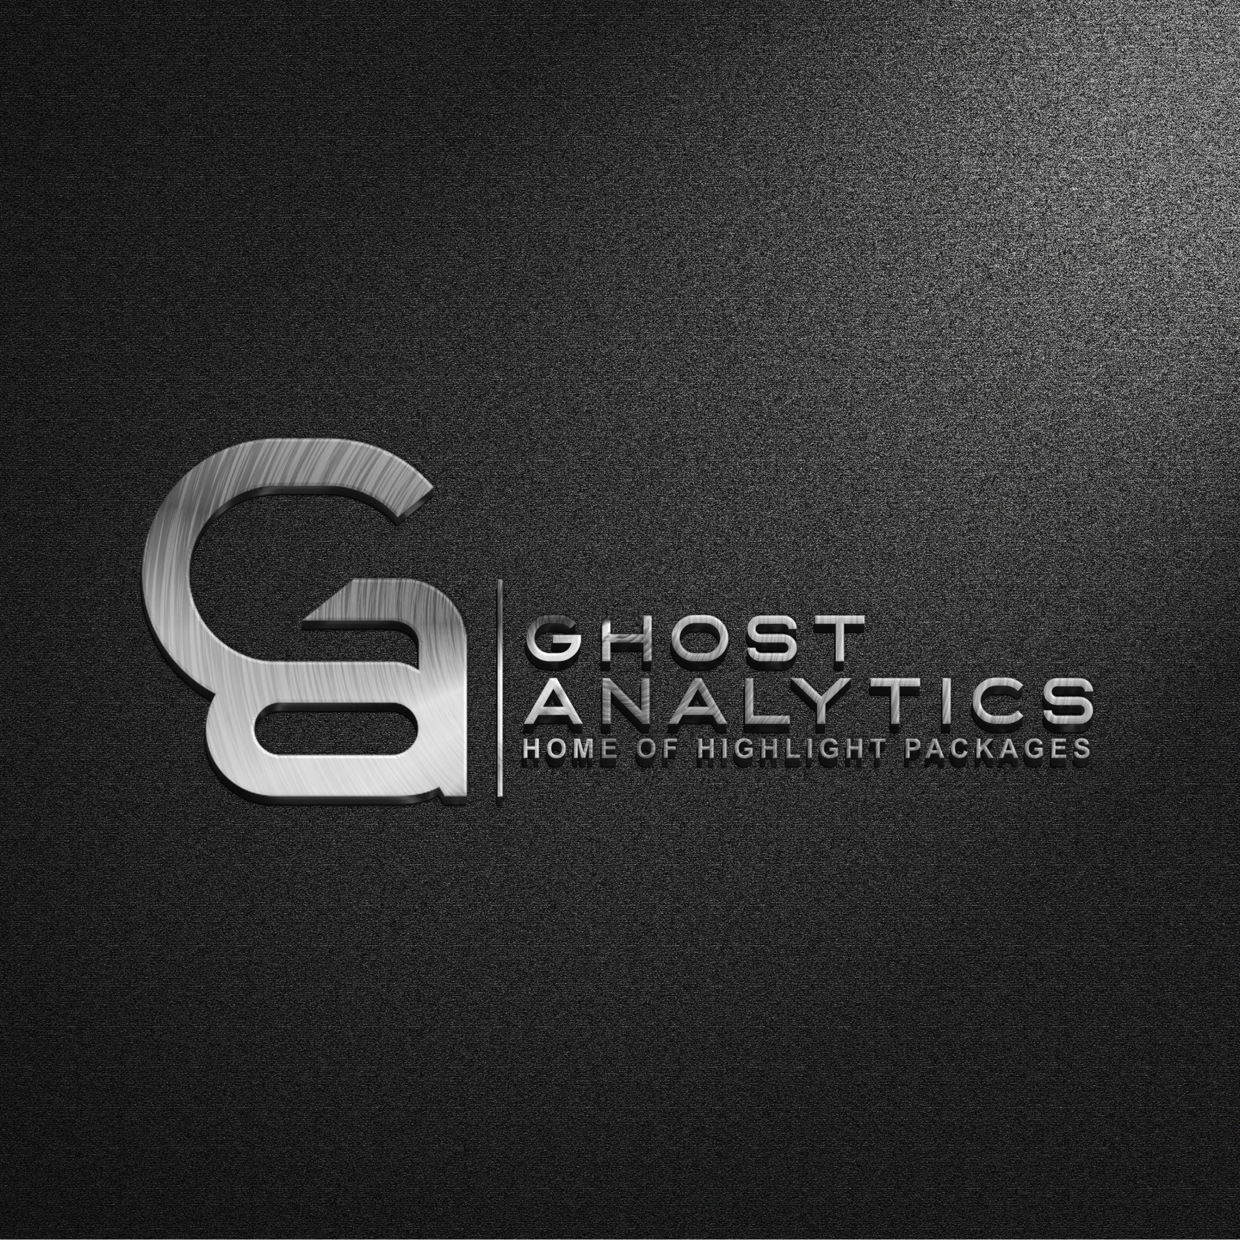 Ghost Analytics Logo (1)